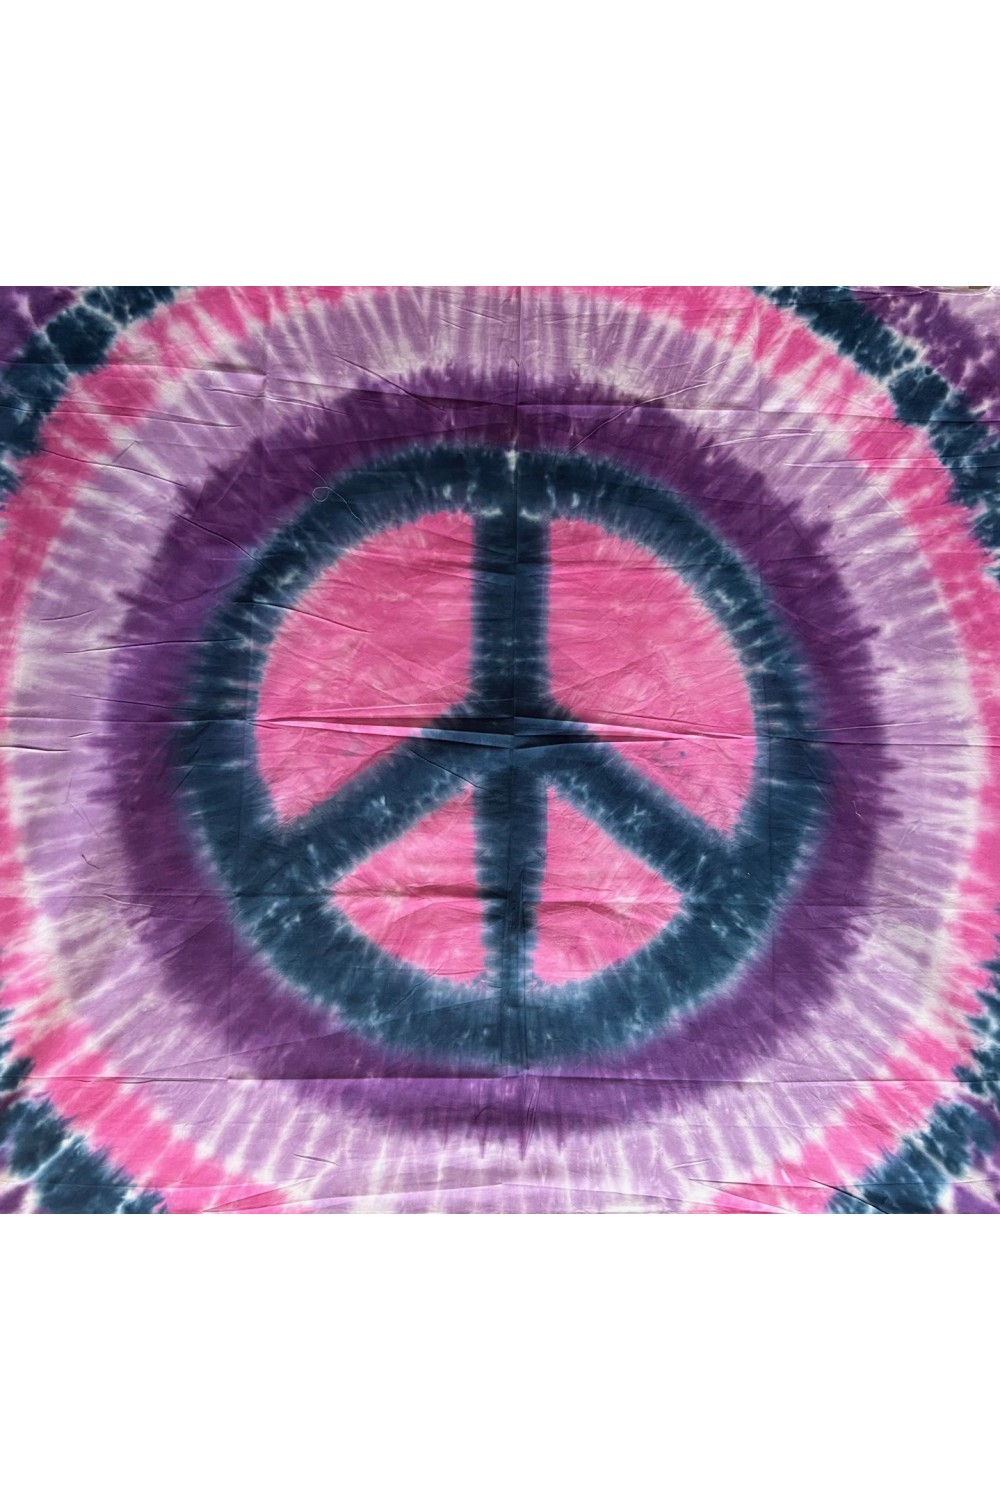 Purple & Pink Peace Sign Tie-Dye Mini Tapestry 30x45